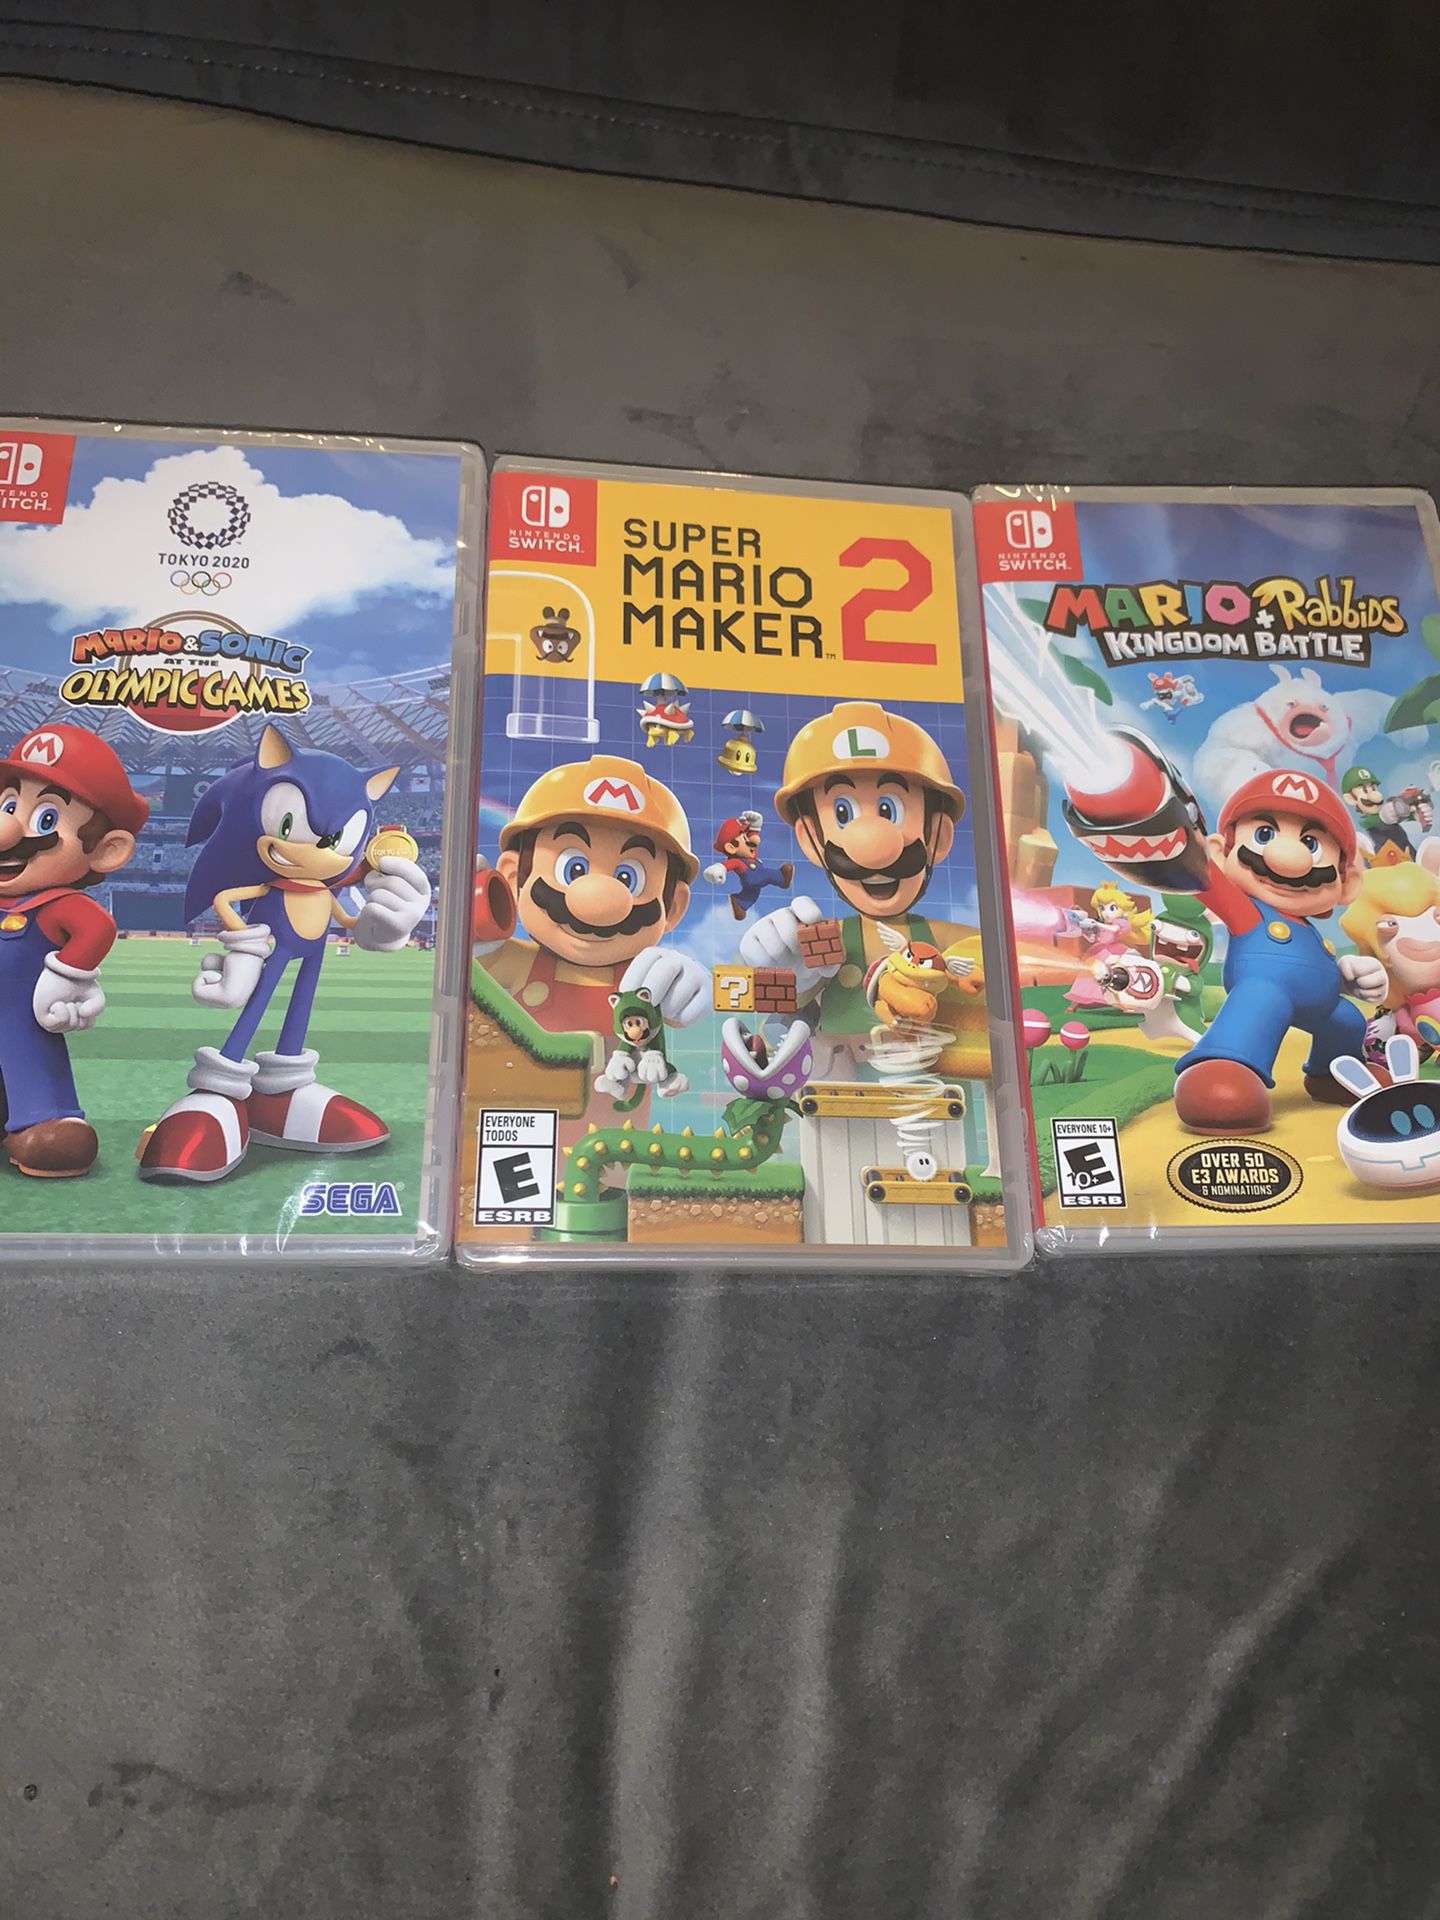 Mario and sonic $40 /. Super Mario maker 2 is $40/ Mario Rabbids Kingdom battle $40